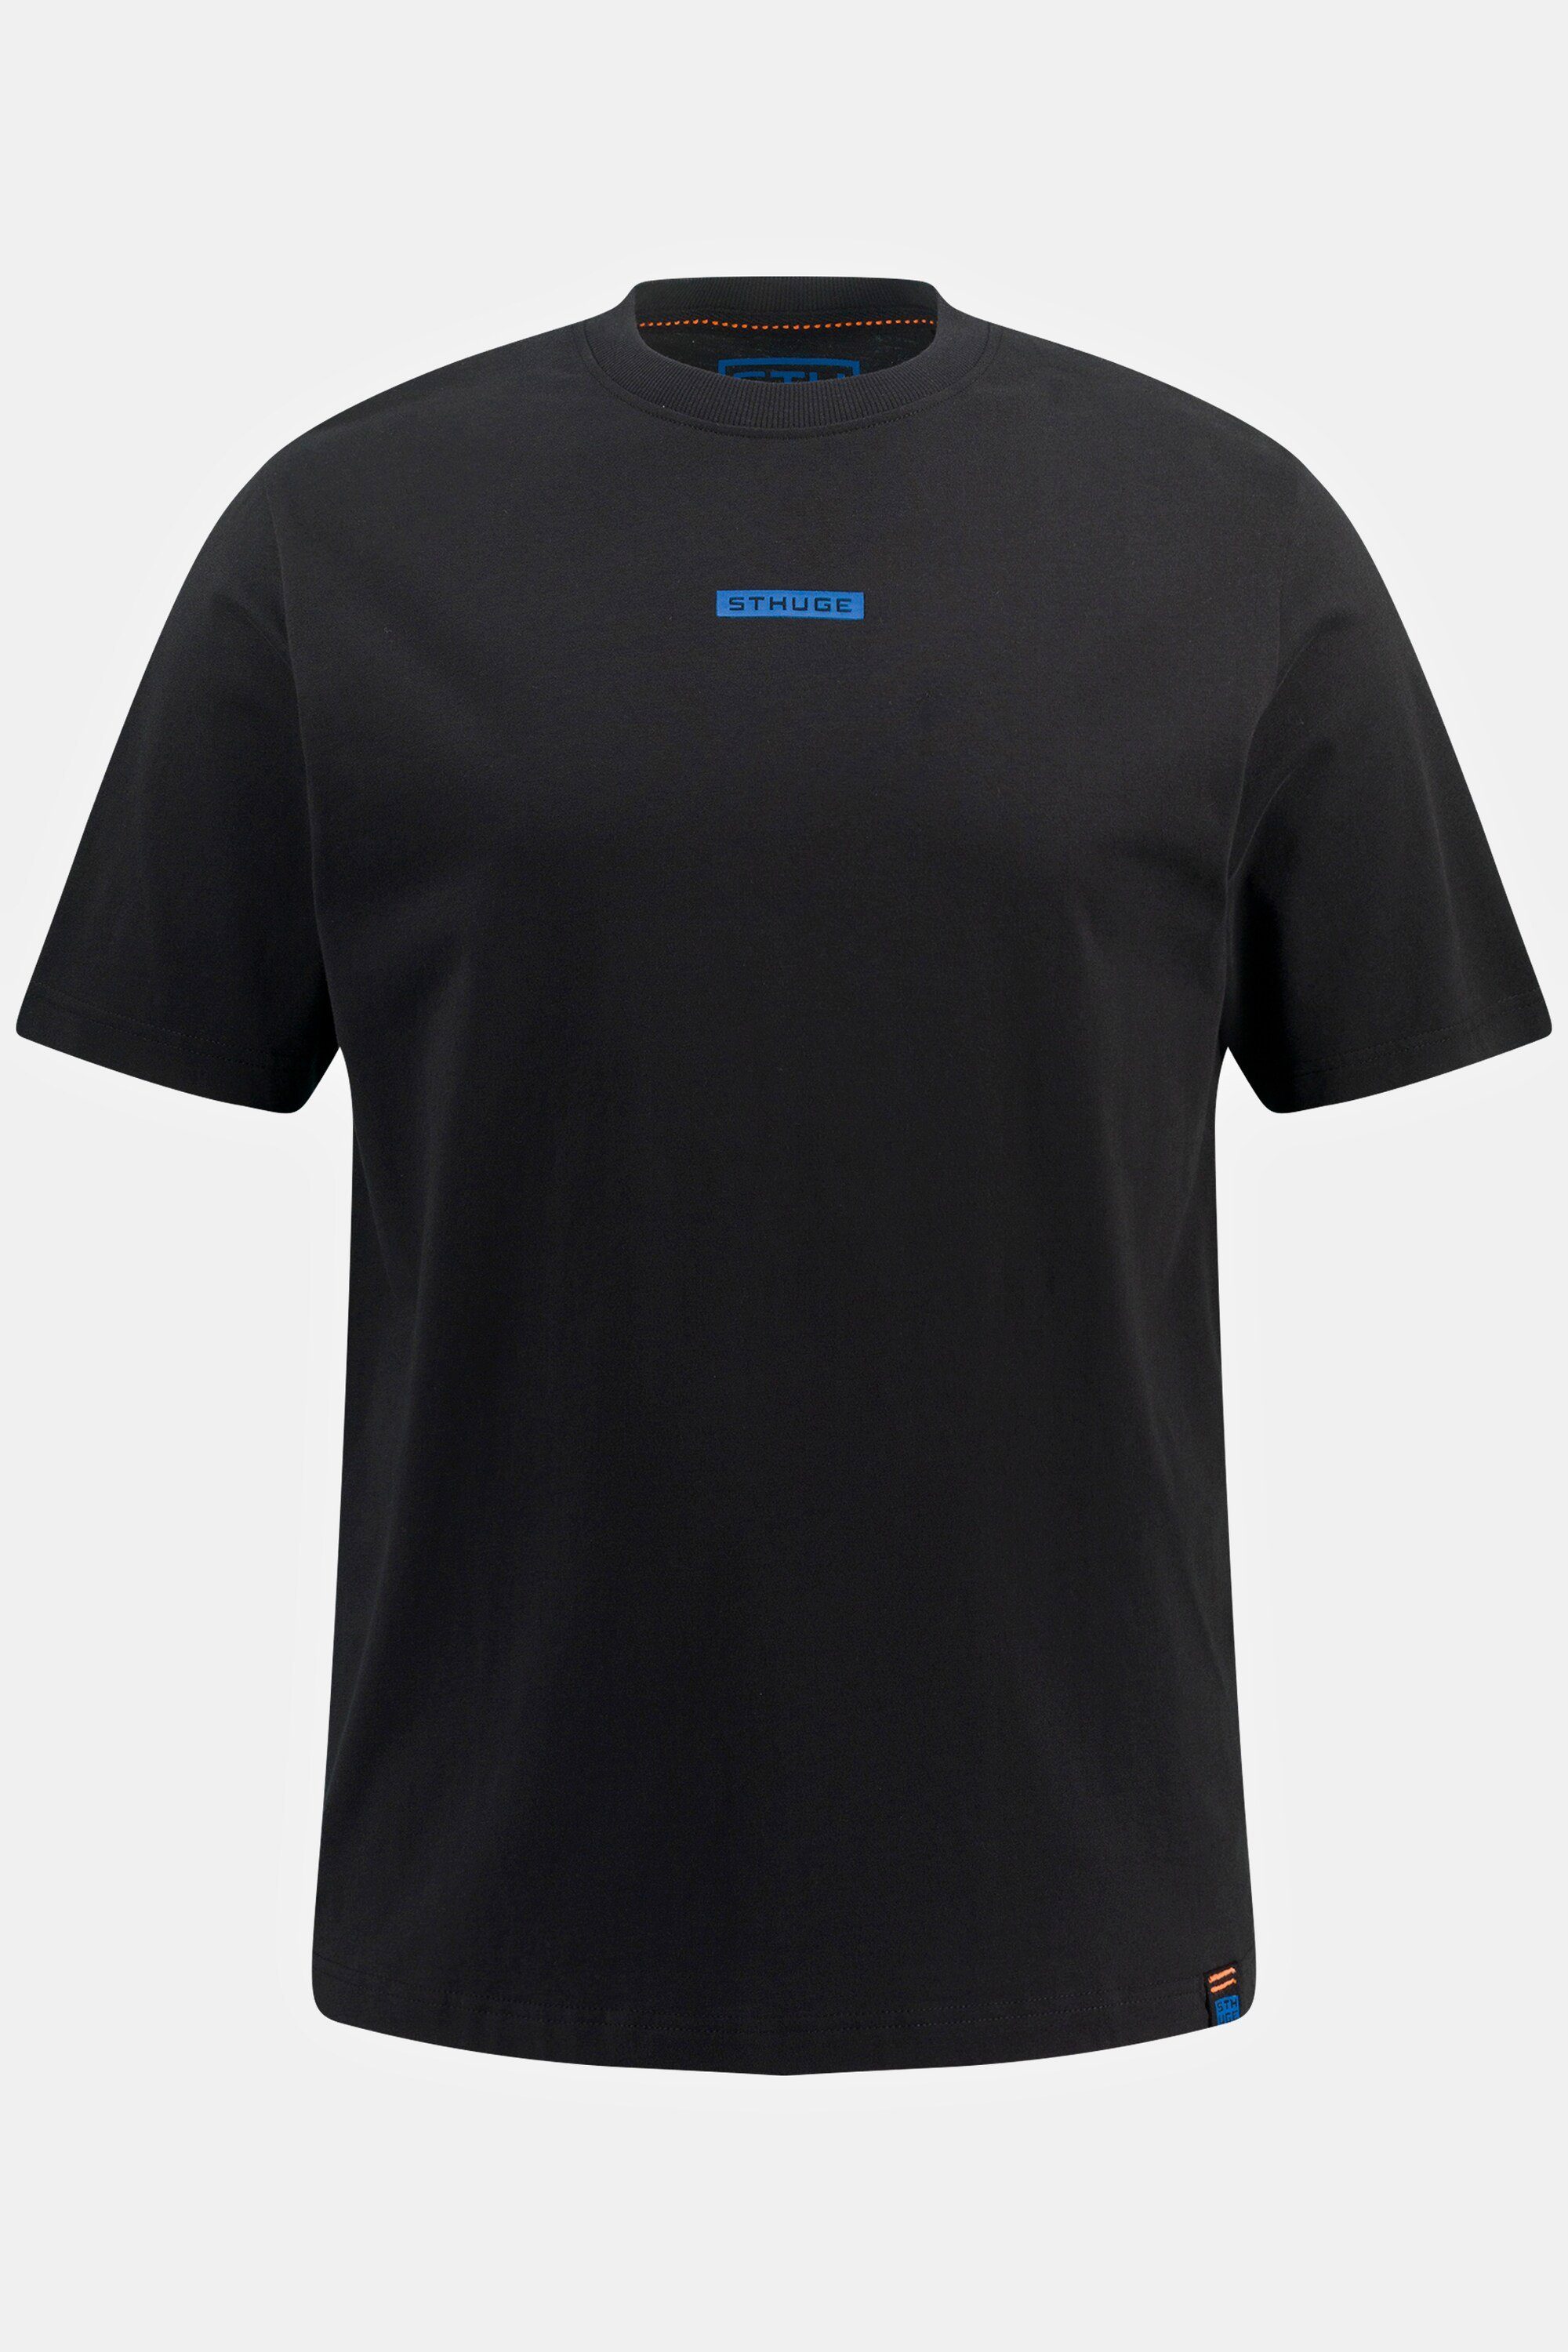 Halbarm Prints bis STHUGE 8 STHUGE T-Shirt T-Shirt XL